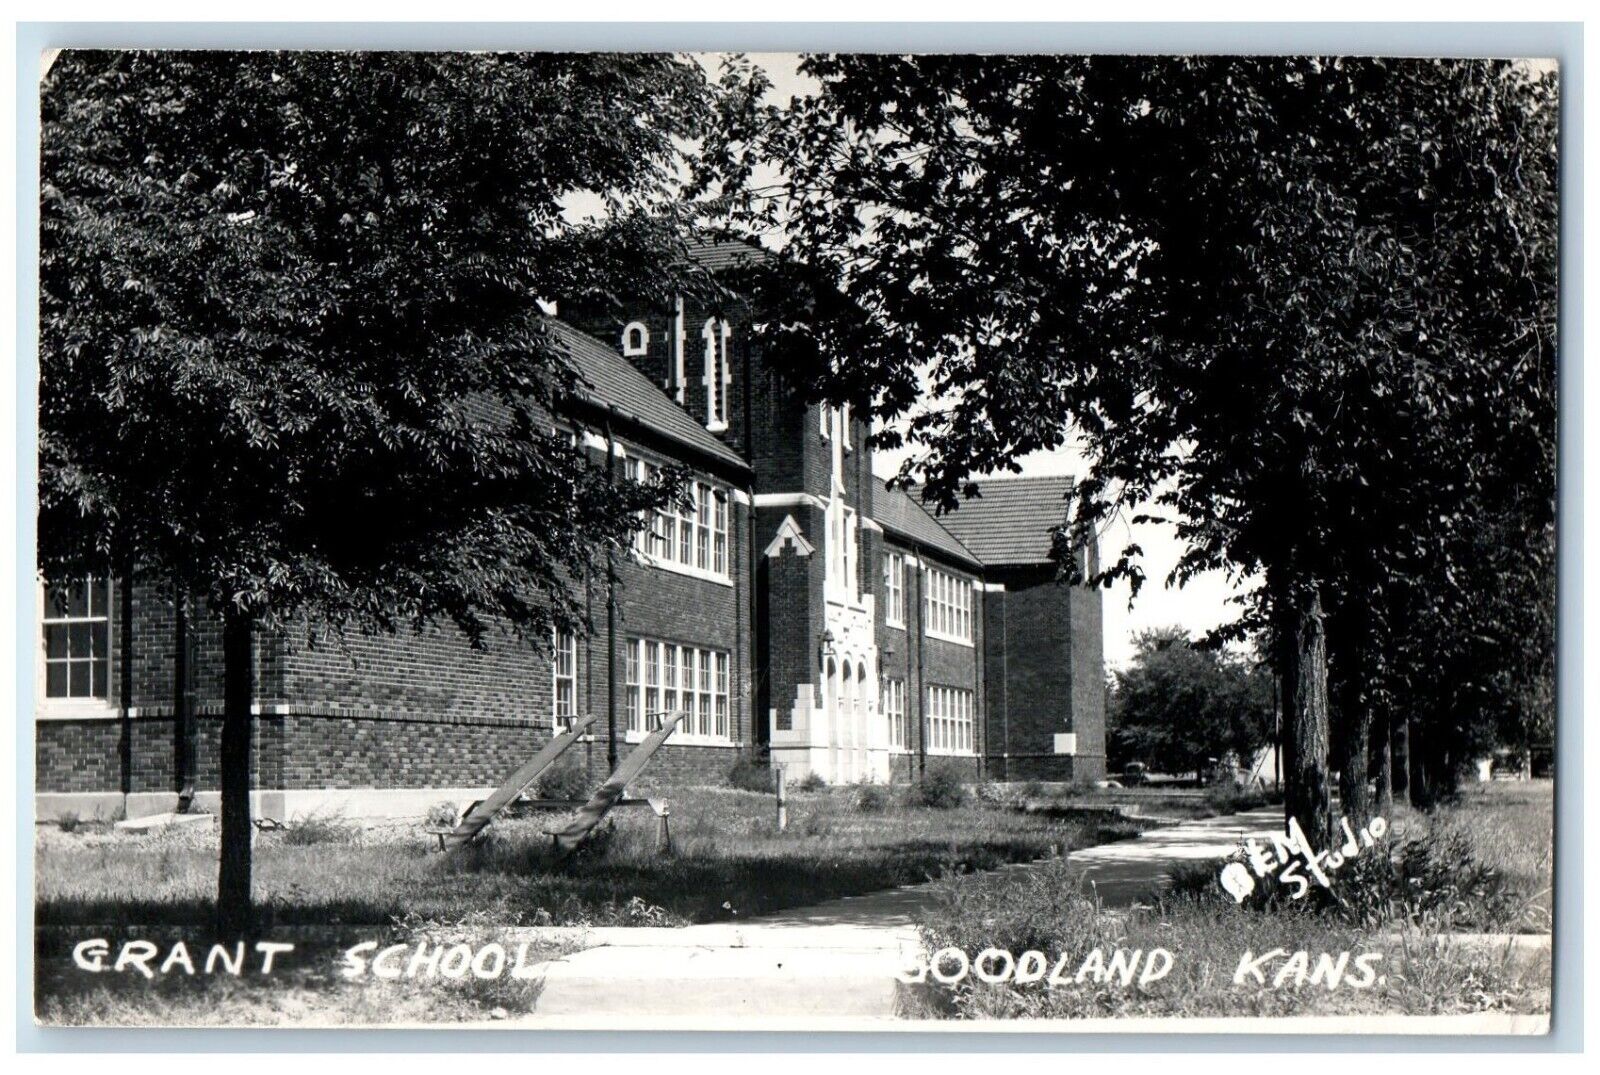 Goodland Kansas KS Postcard RPPC Photo Grant School Building c1940's Vintage